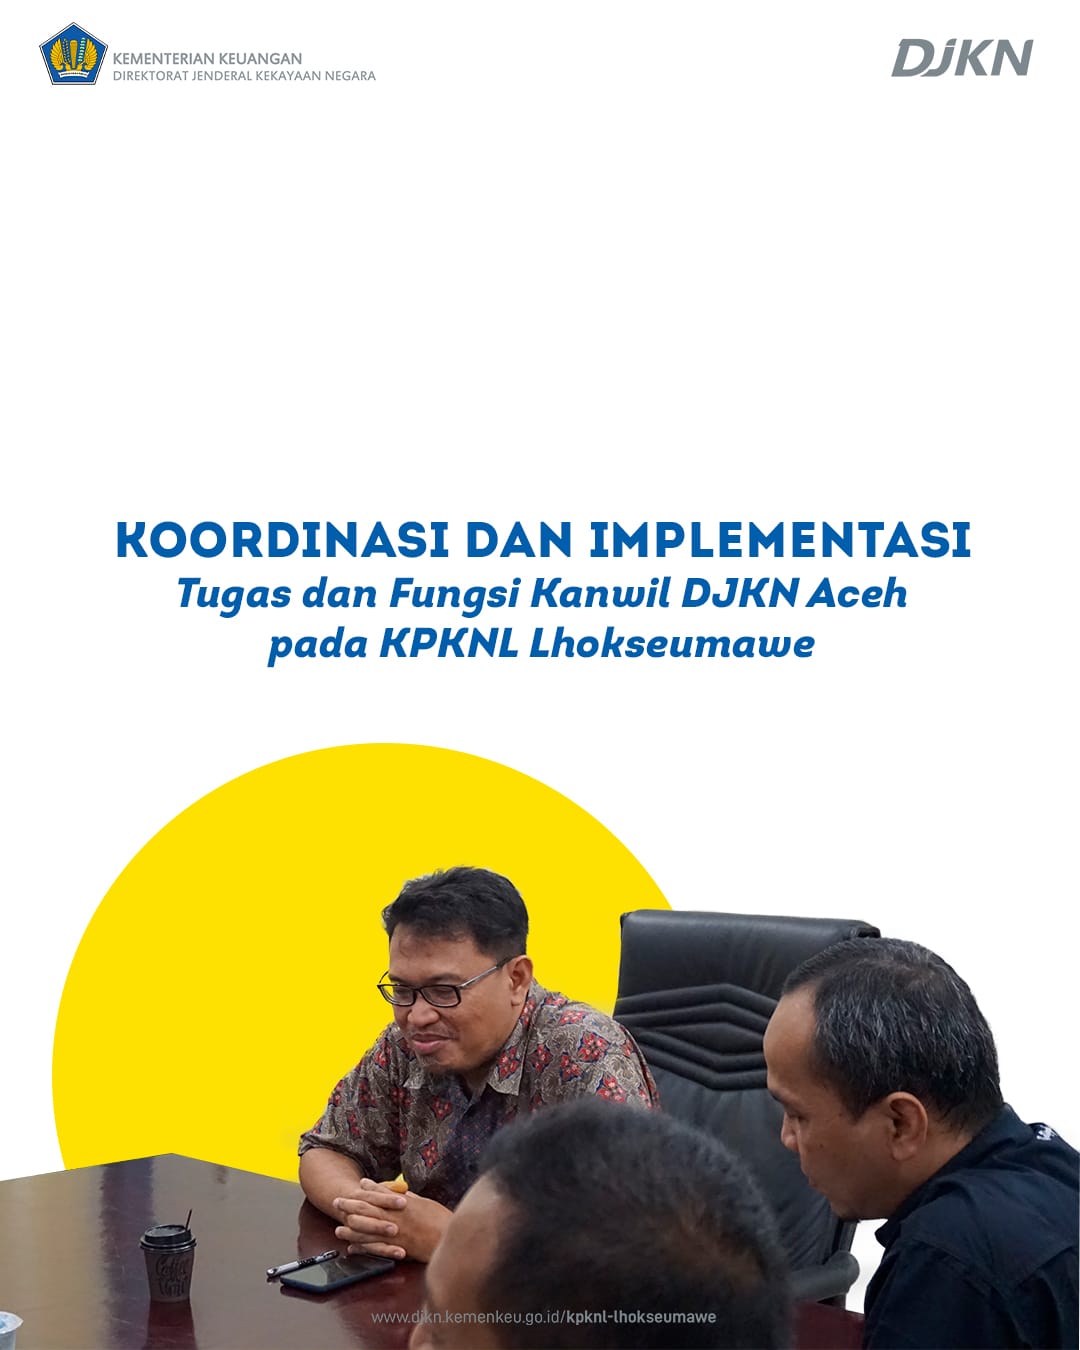 Koordinasi Implementasi Tugas dan Fungsi Kanwil DJKN Aceh  pada KPKNL Lhokseumawe